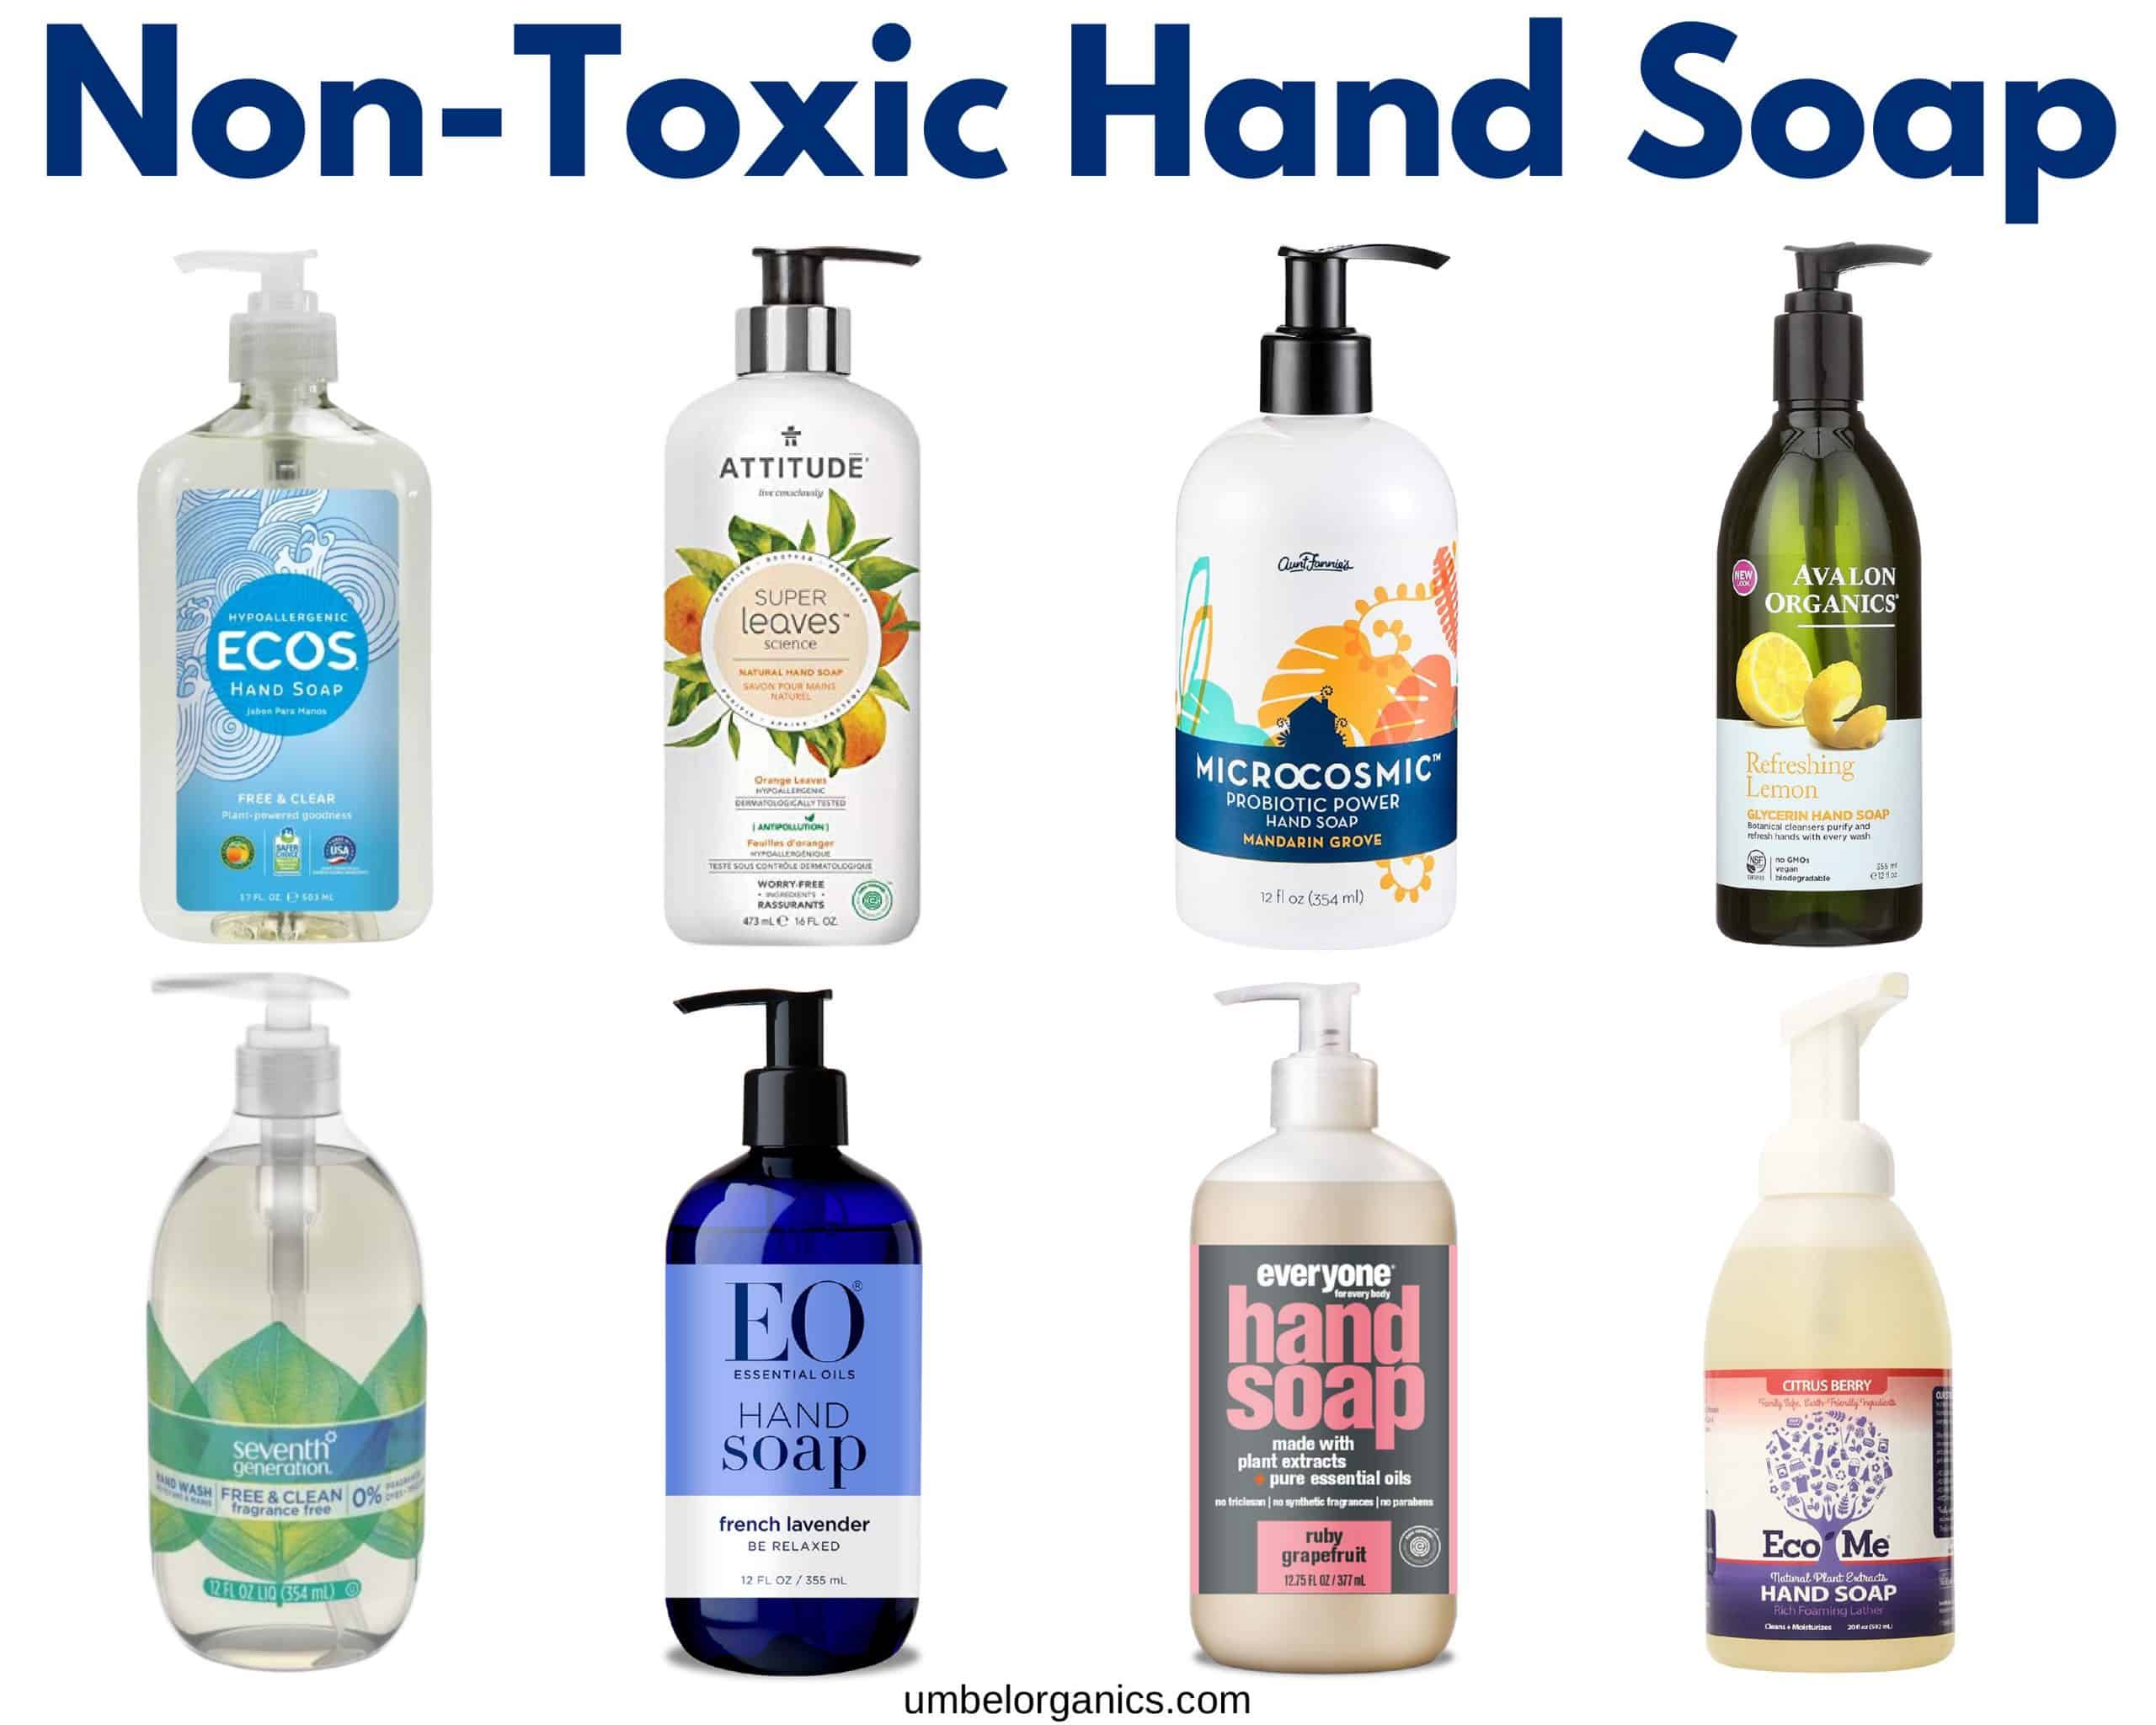 8 Non-Toxic Hand Soap Brands